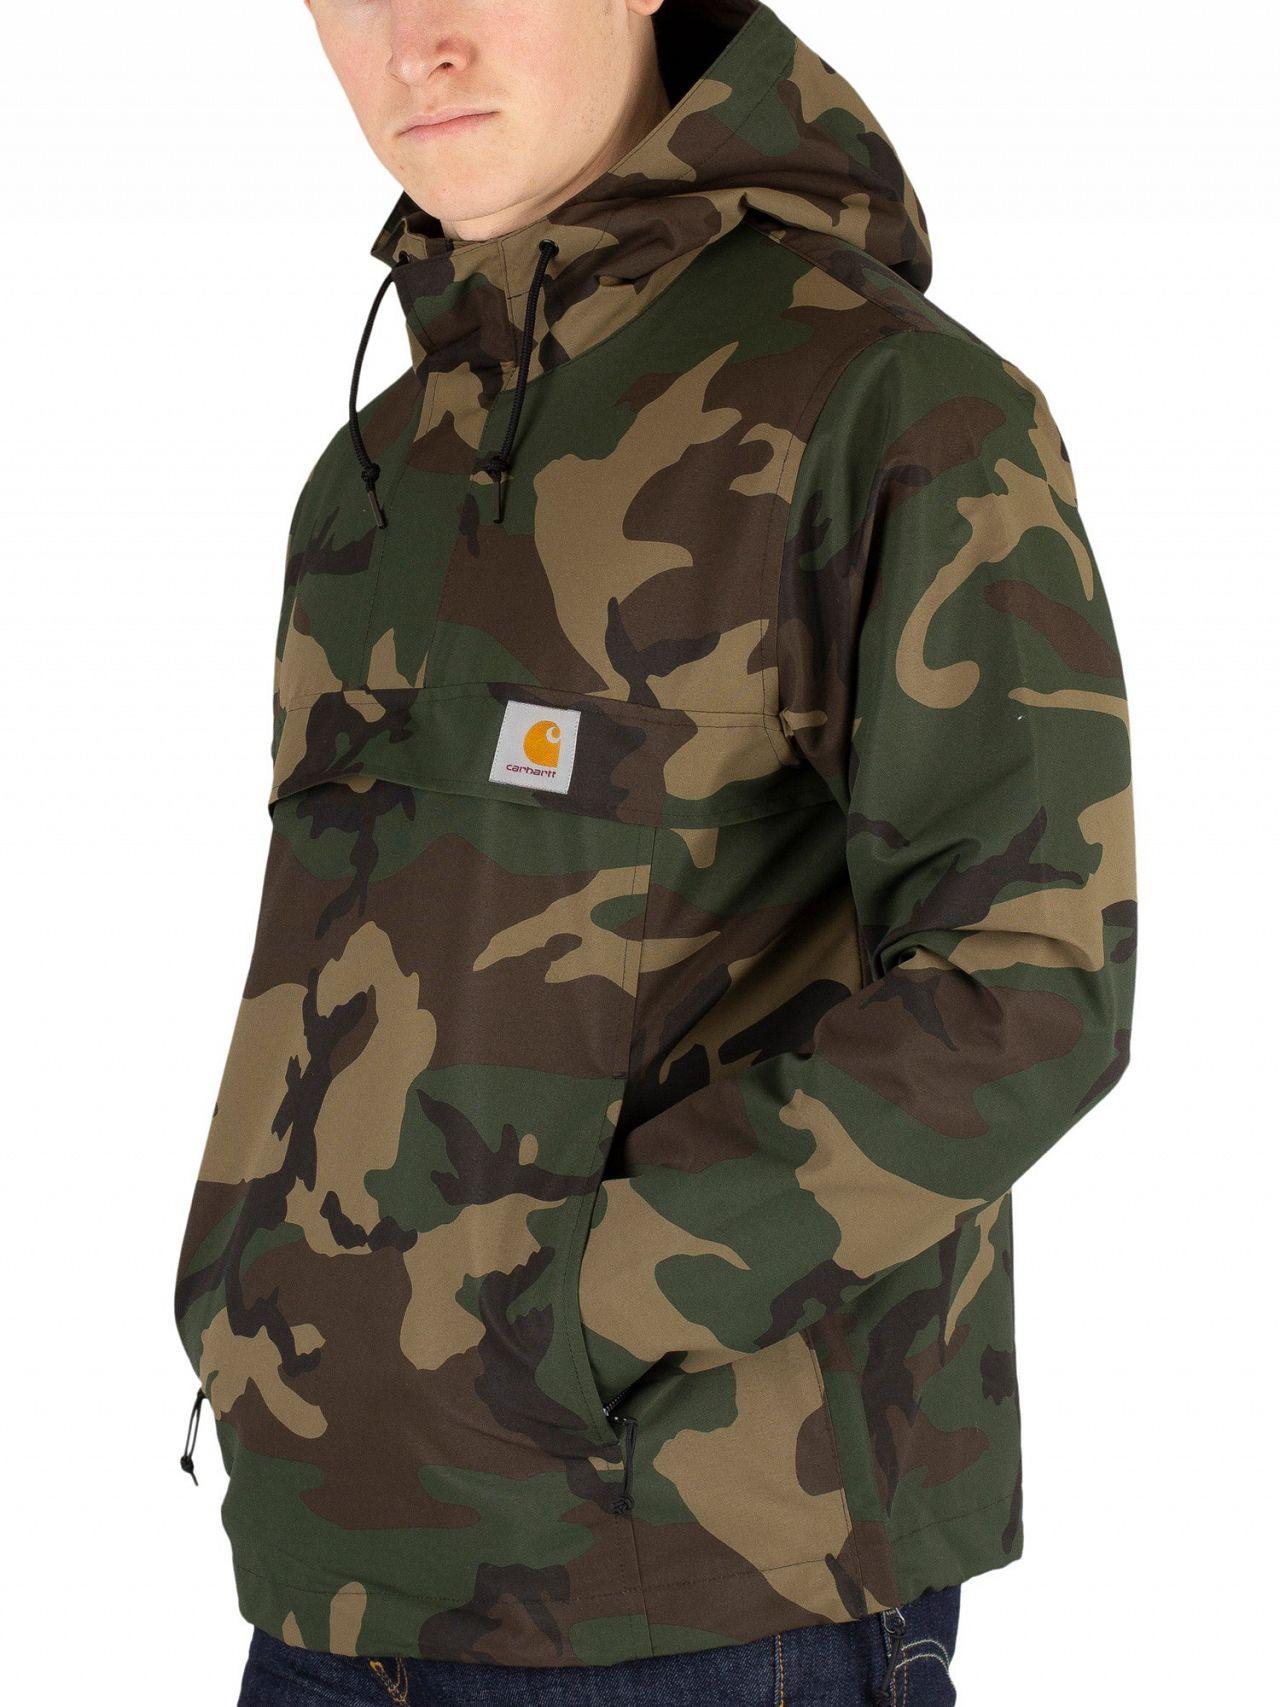 Carhartt WIP Synthetic Nimbus Pullover Jacket Camo Laurel in Brown (Green)  for Men - Lyst